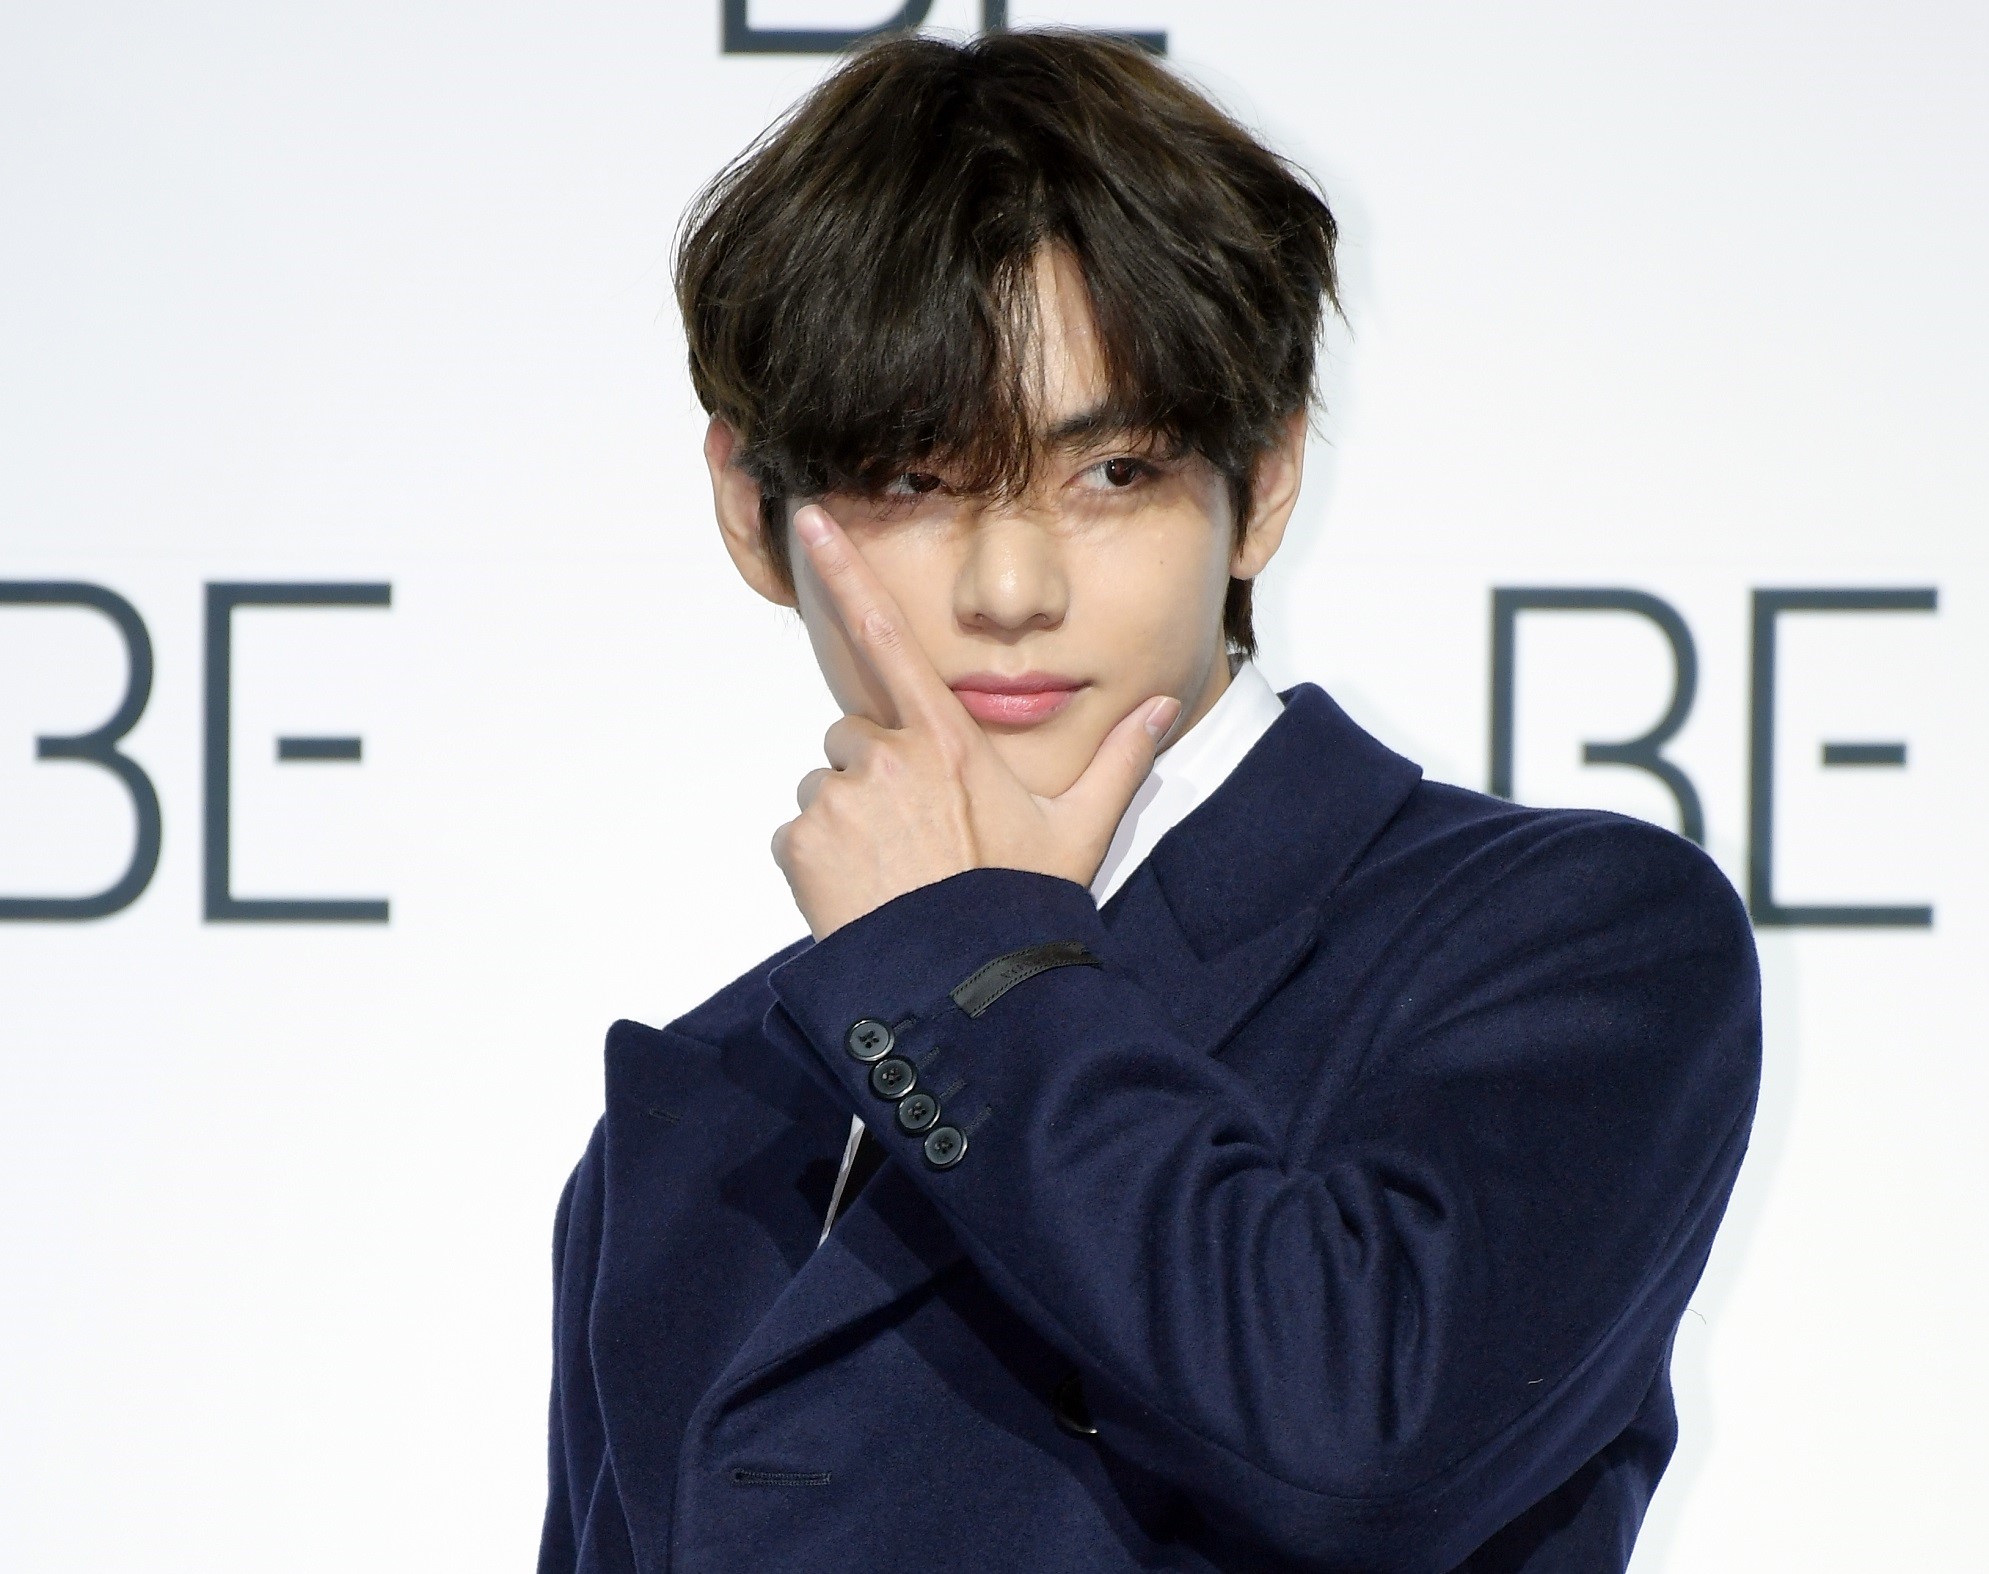 V of BTS poses at BTS' press conference for 'BE' in November 2020